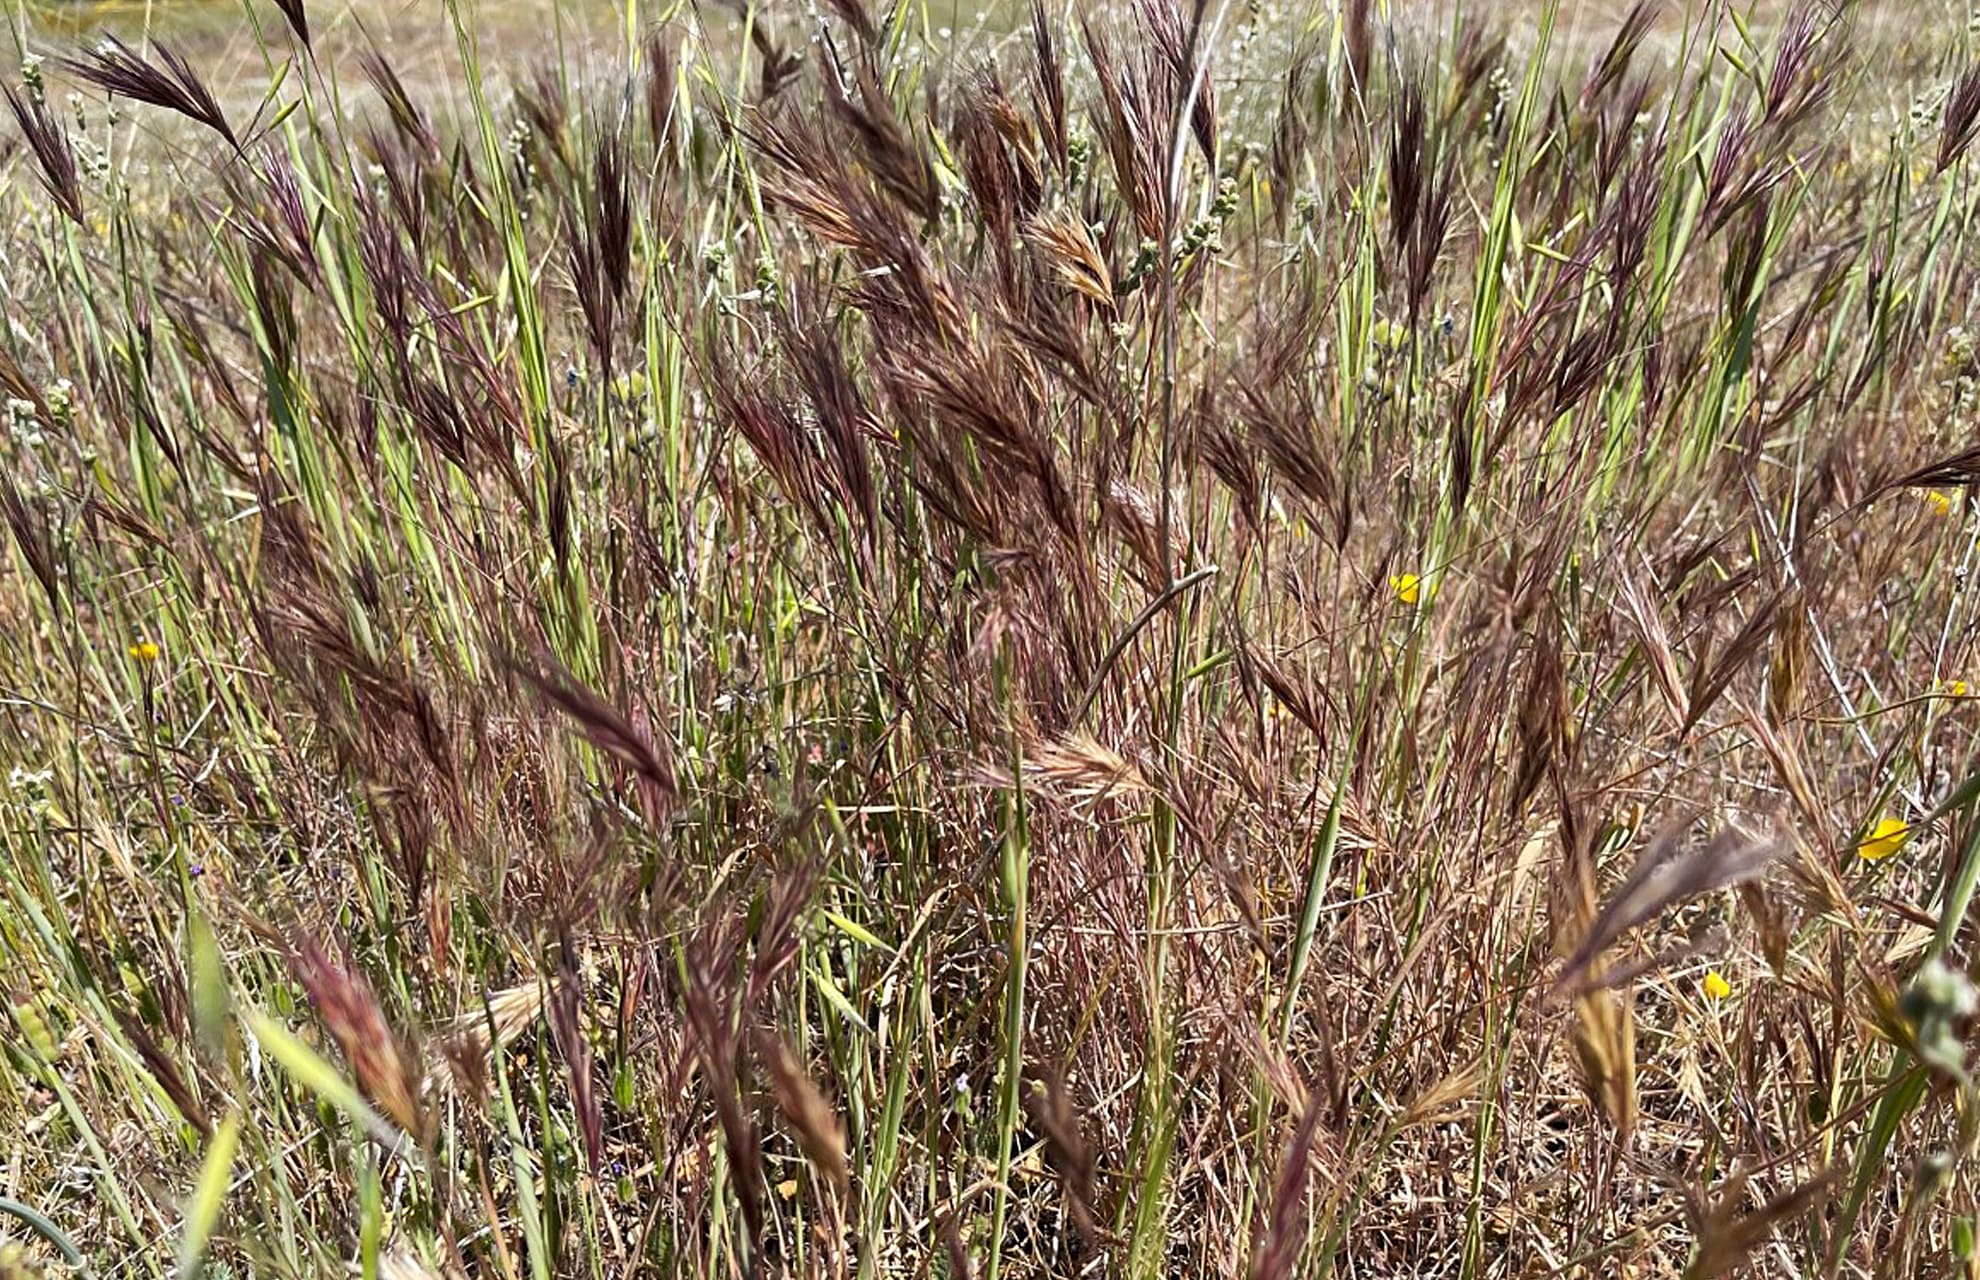 State Grass - Purple Needlegrass